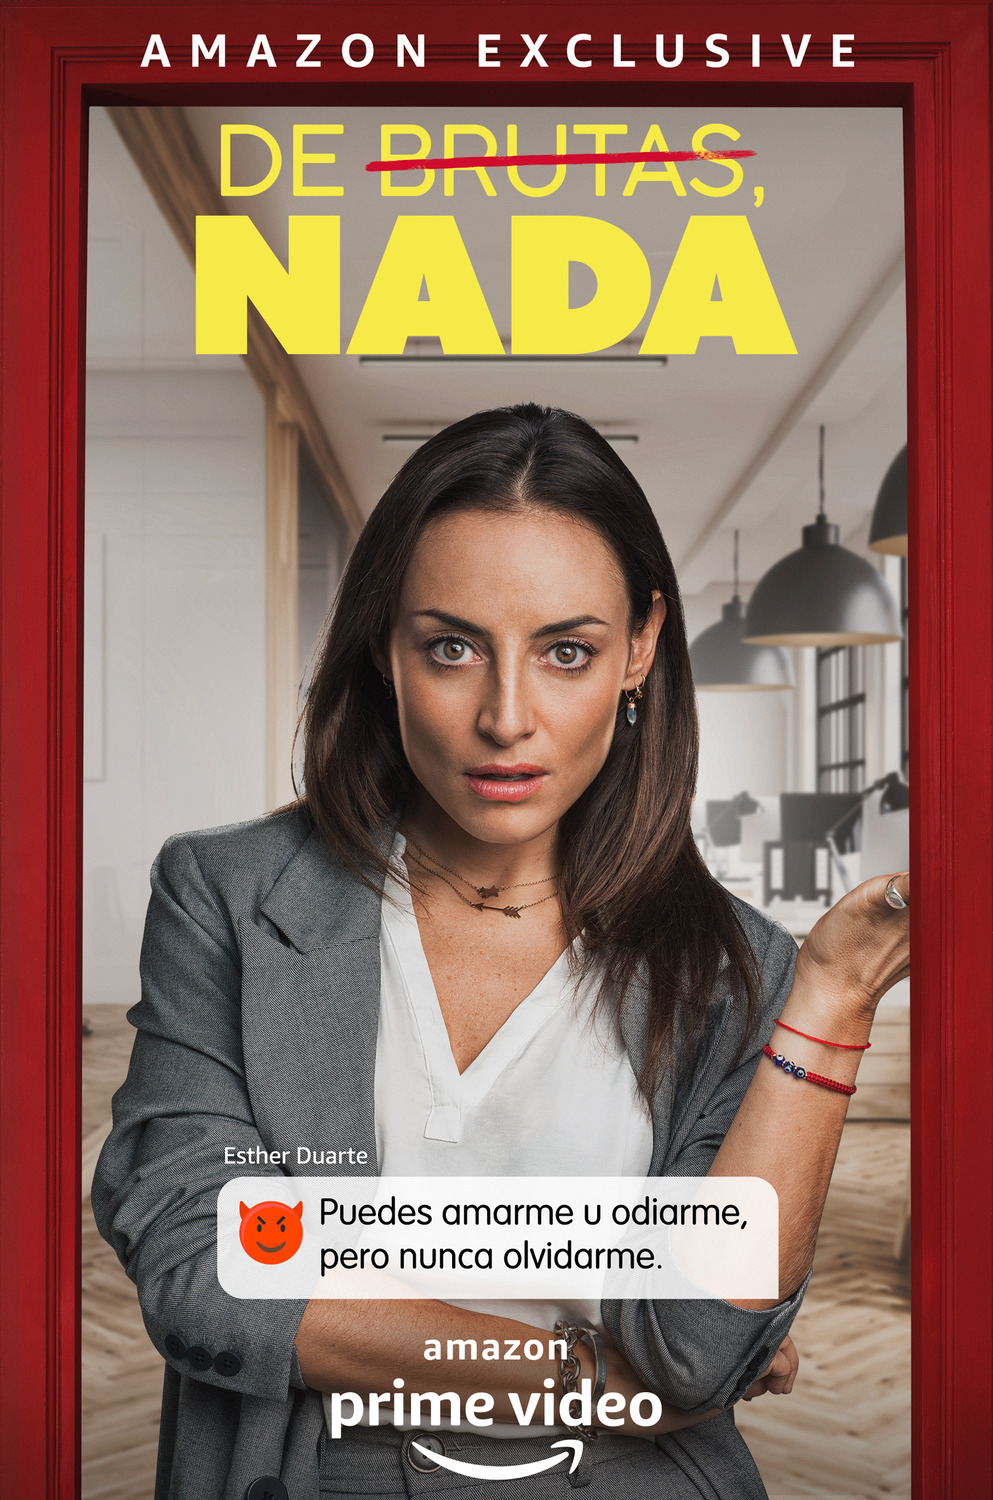 Extra Large TV Poster Image for De Brutas, Nada (#6 of 22)